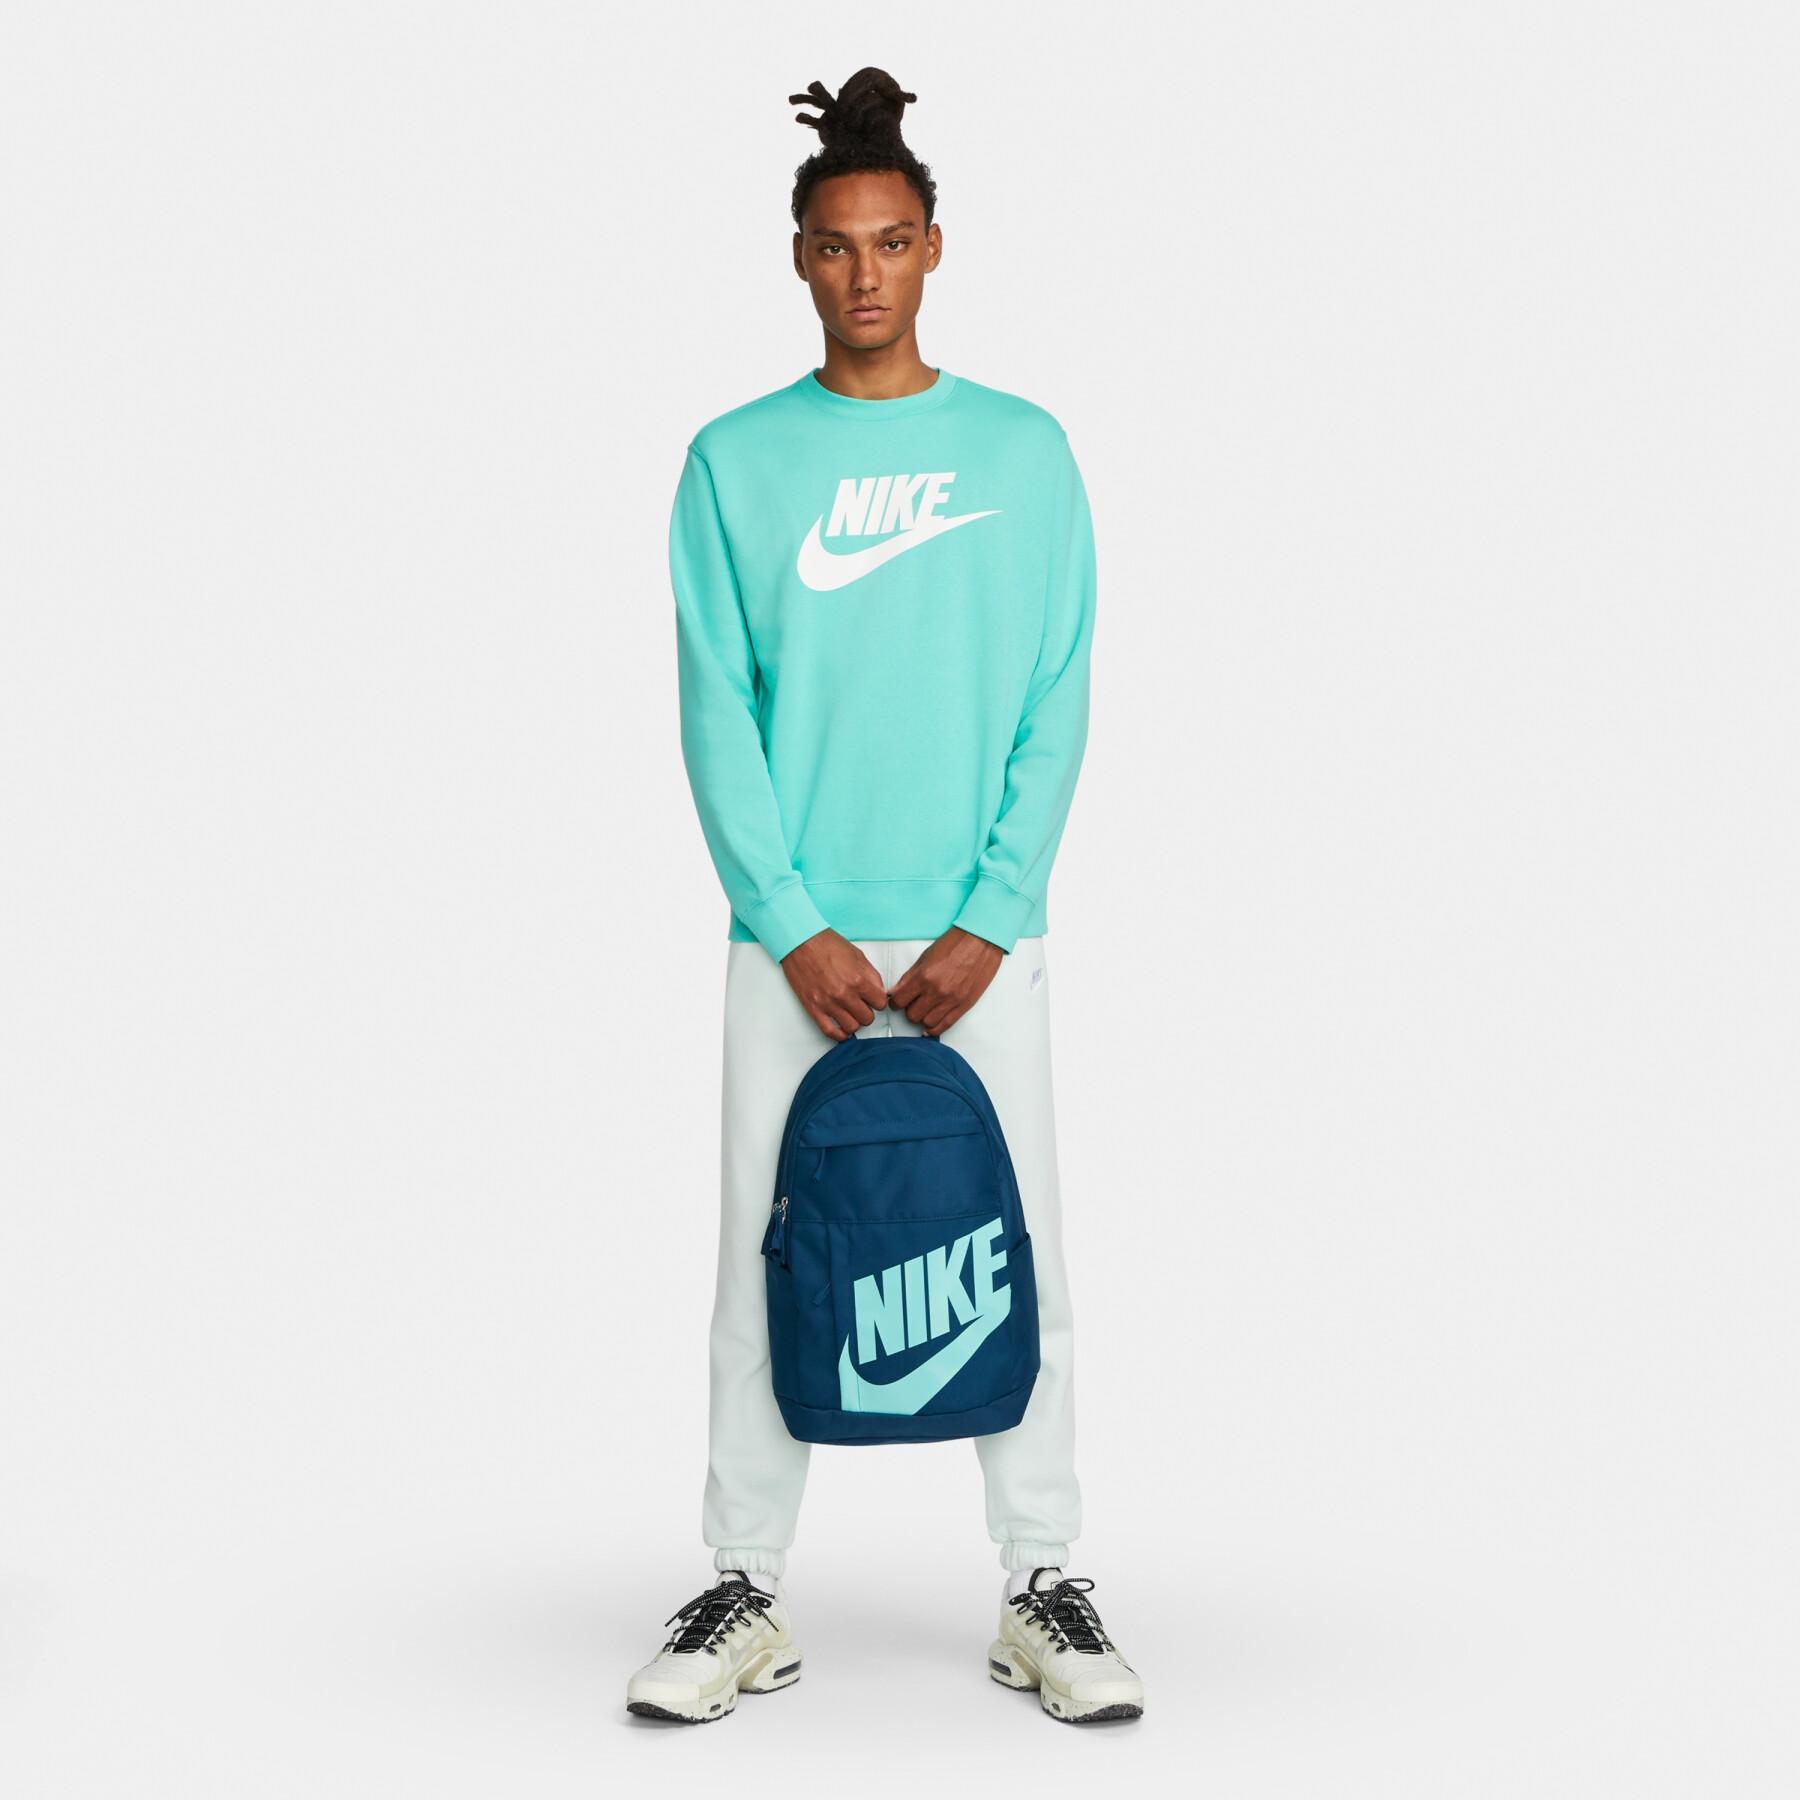 Ryggsäck Nike Elemental